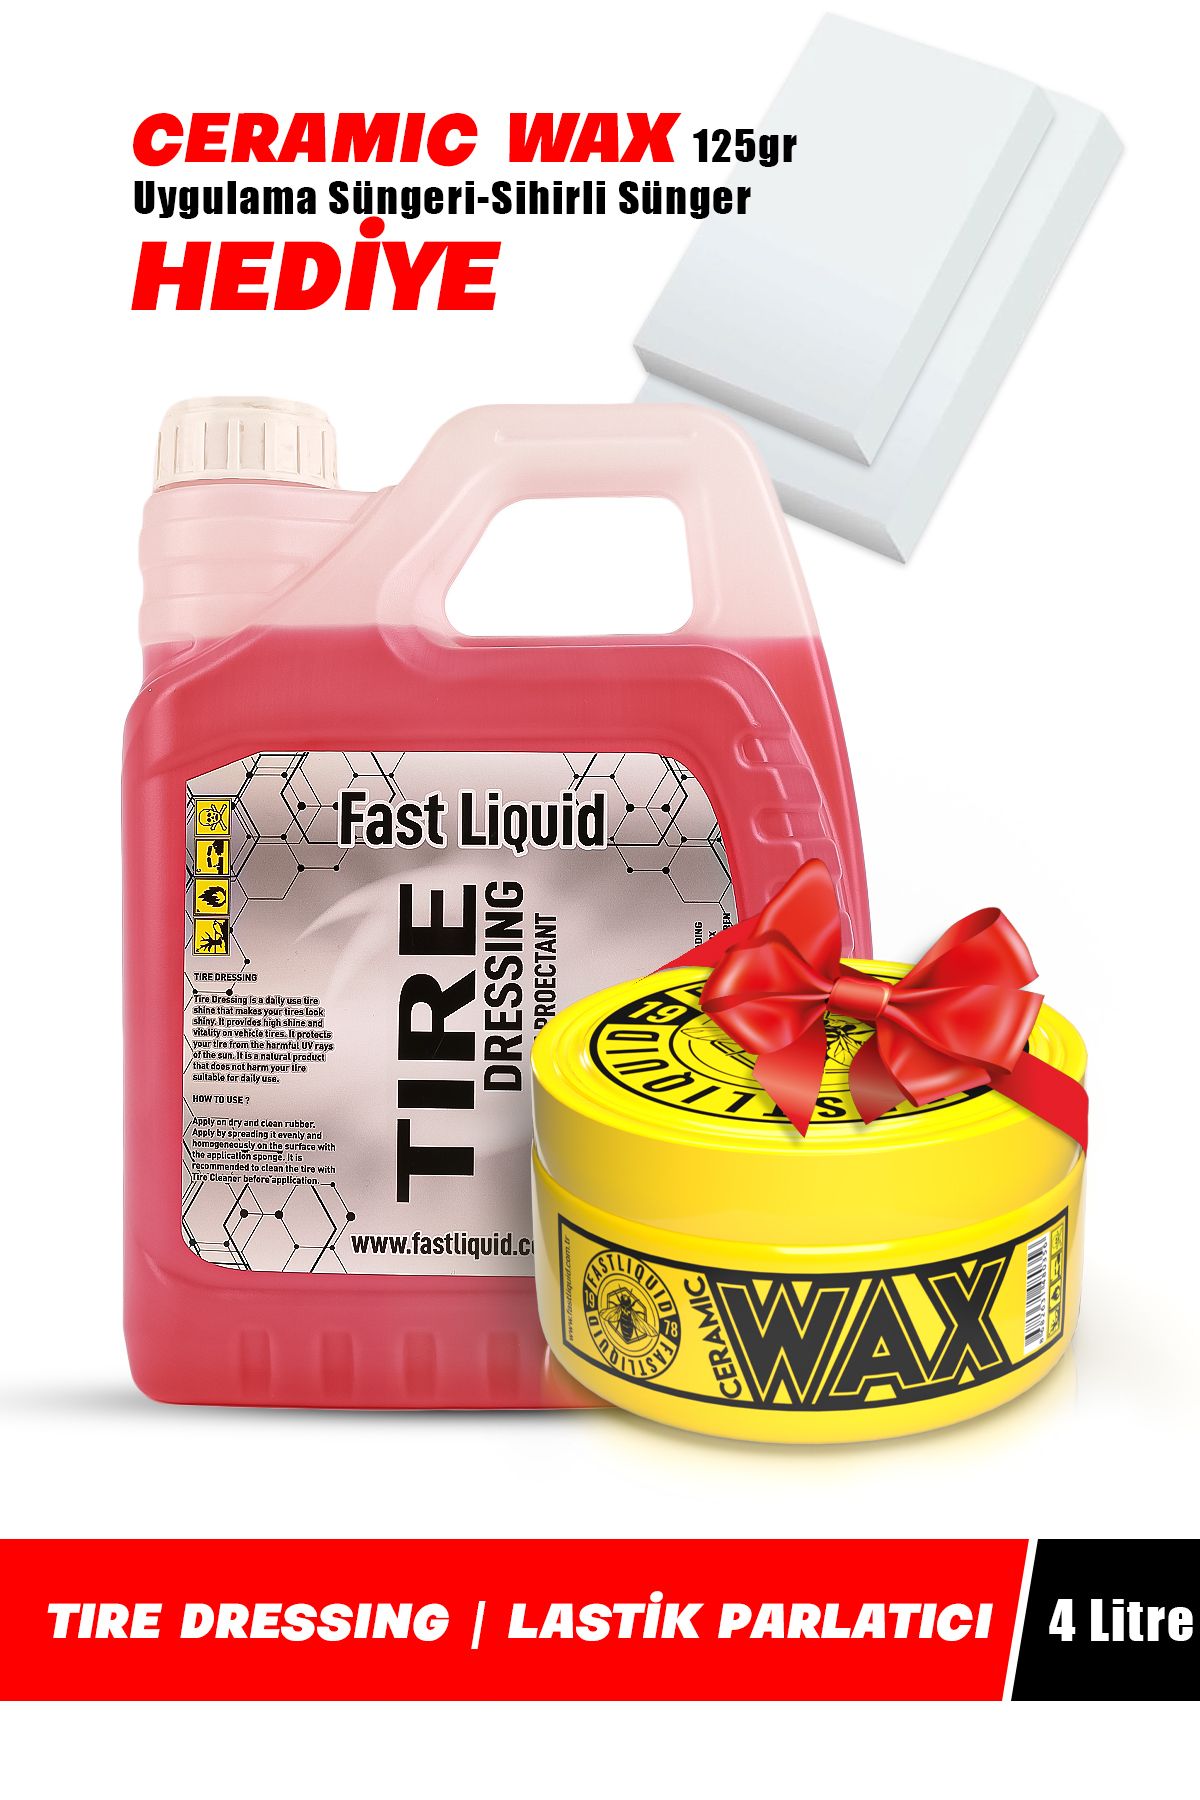 Fast Liquid Lastik Parlatıcı (TİRE DRESSİNG) 4 Litre Yüksek Parlaklık | Ceramic Wax Hediyeli 125 gr